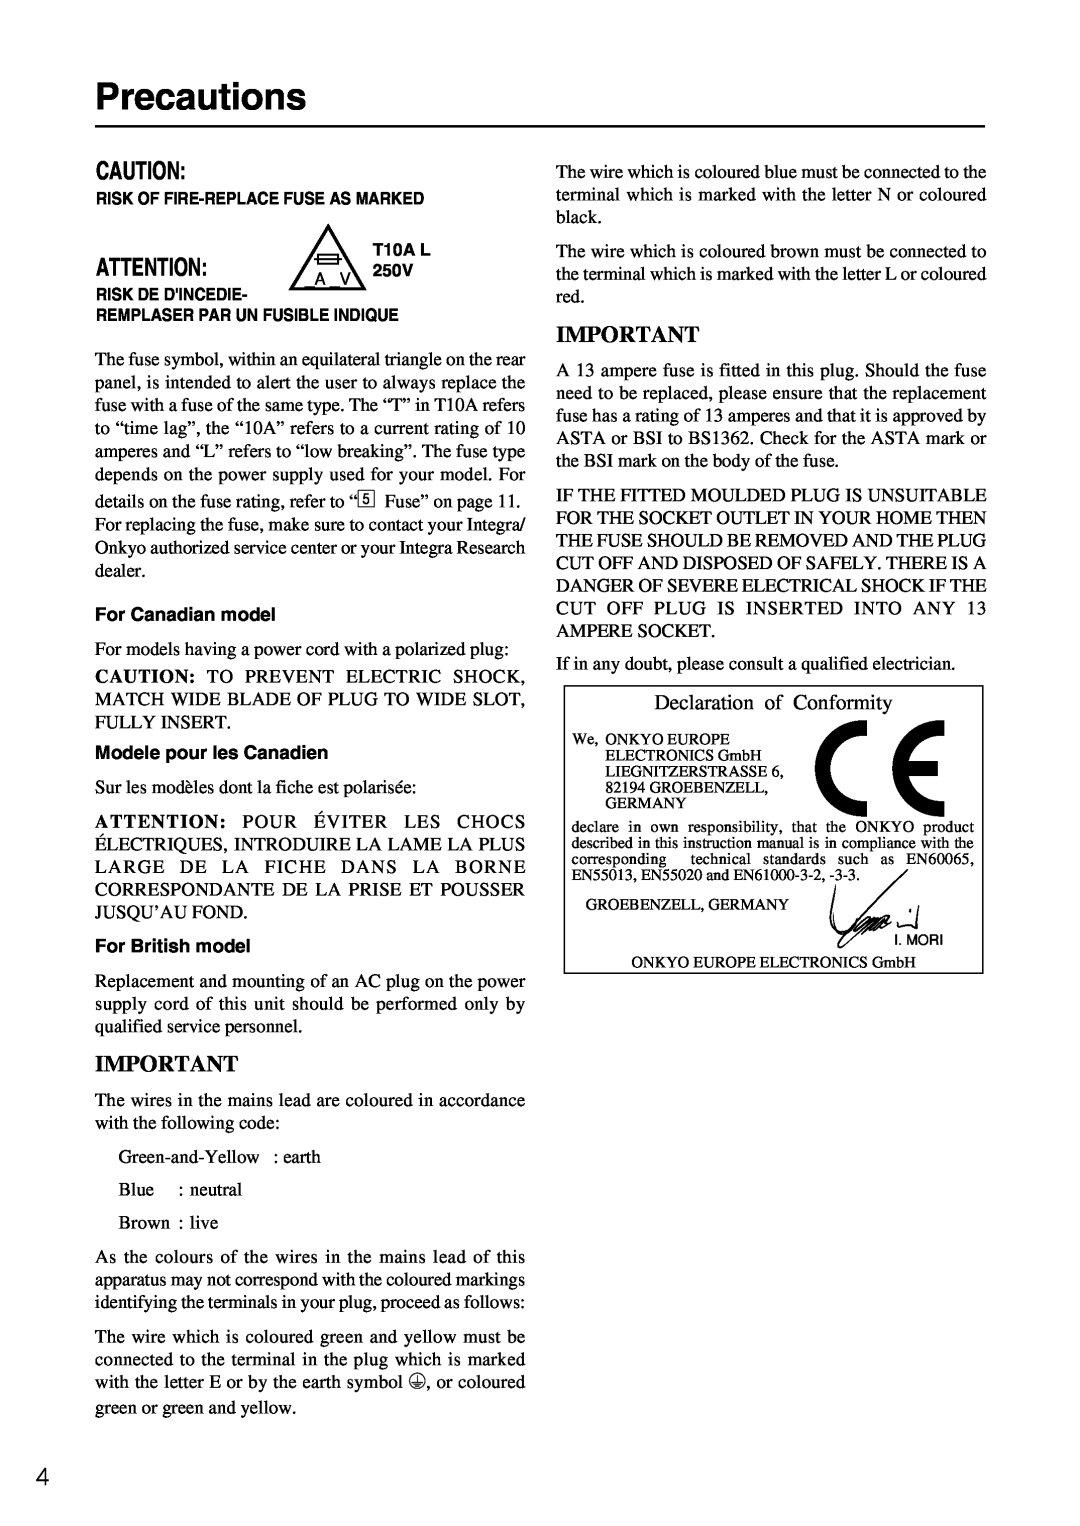 Onkyo RDA-7.1 Precautions, Declaration of Conformity, For Canadian model, Modele pour les Canadien, For British model 